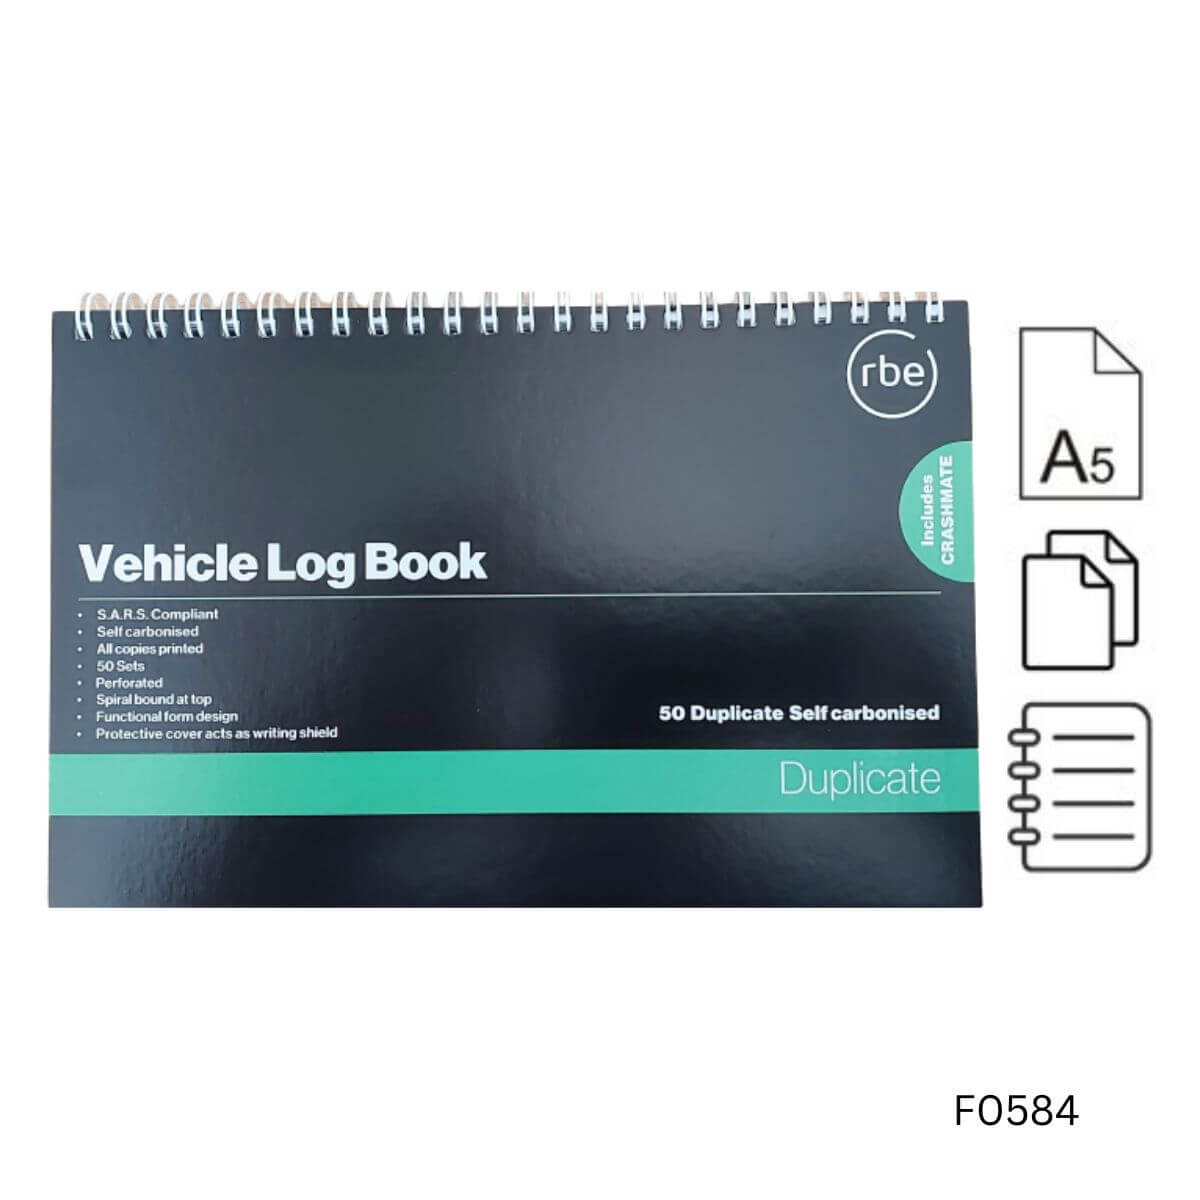 A5 Motor Vehicle Log Book with CRASHMATE